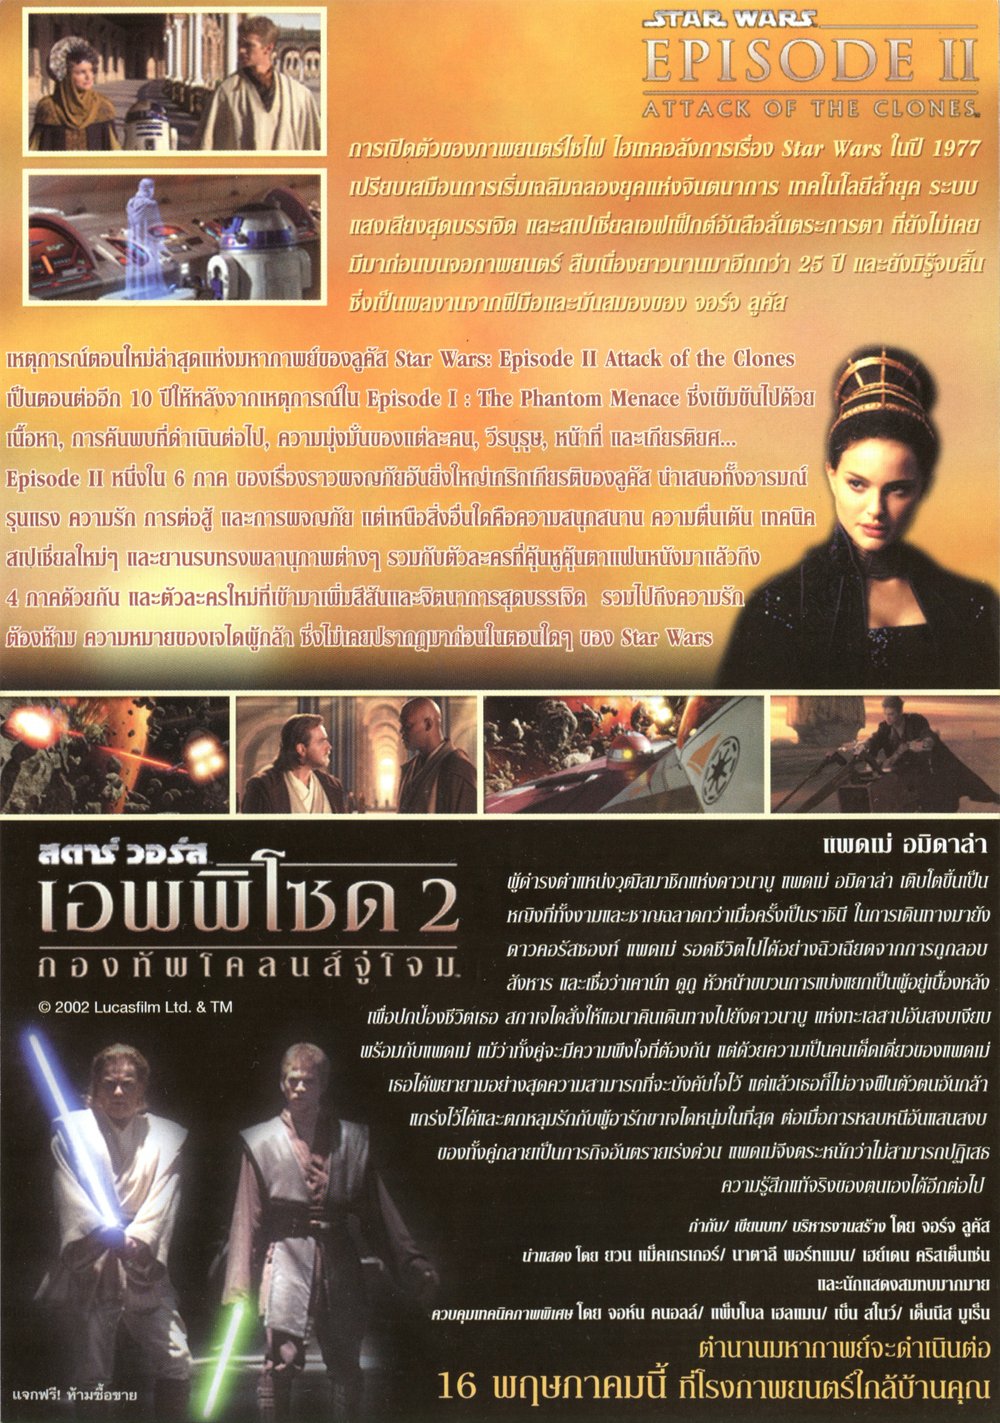 AOTC Thailand Handbill - Padme 2.jpg